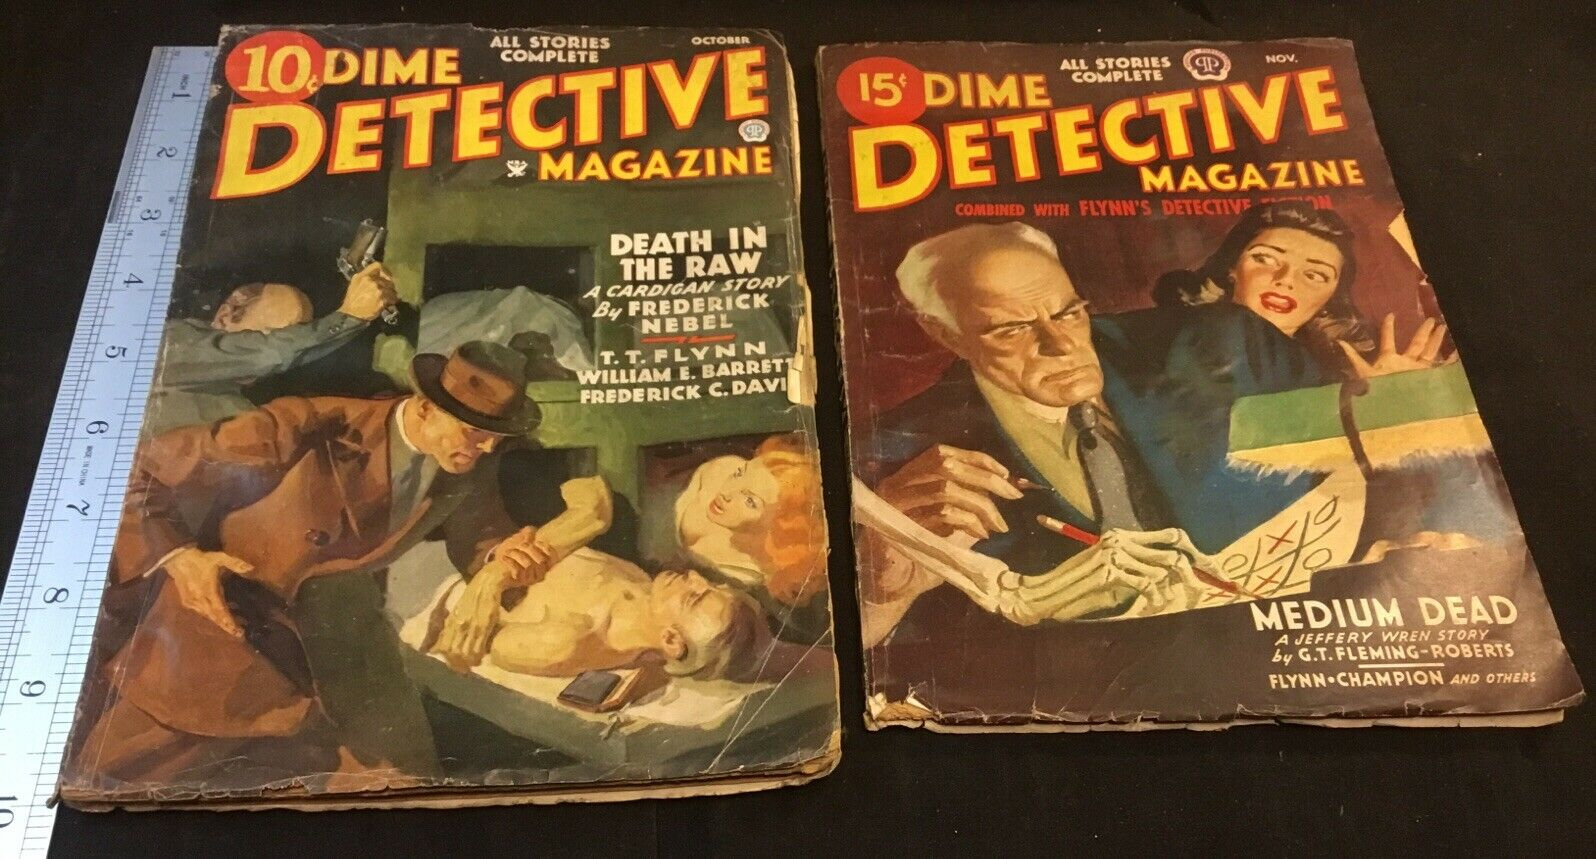 Dime Detective - October 1935